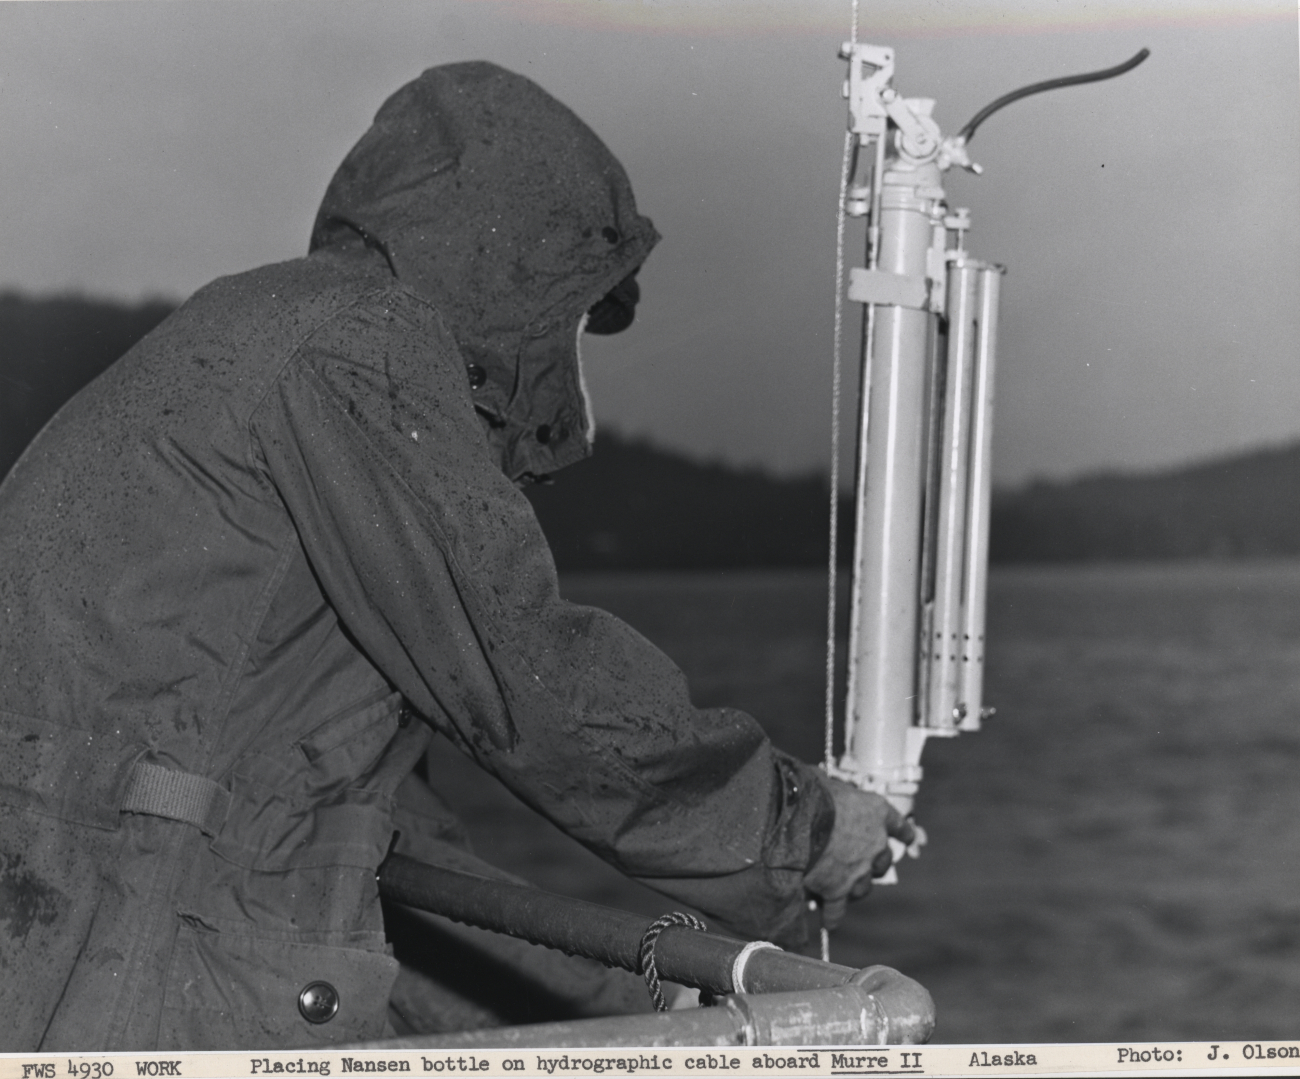 Placing a Nansen bottle on the wire aboard the MURRE II